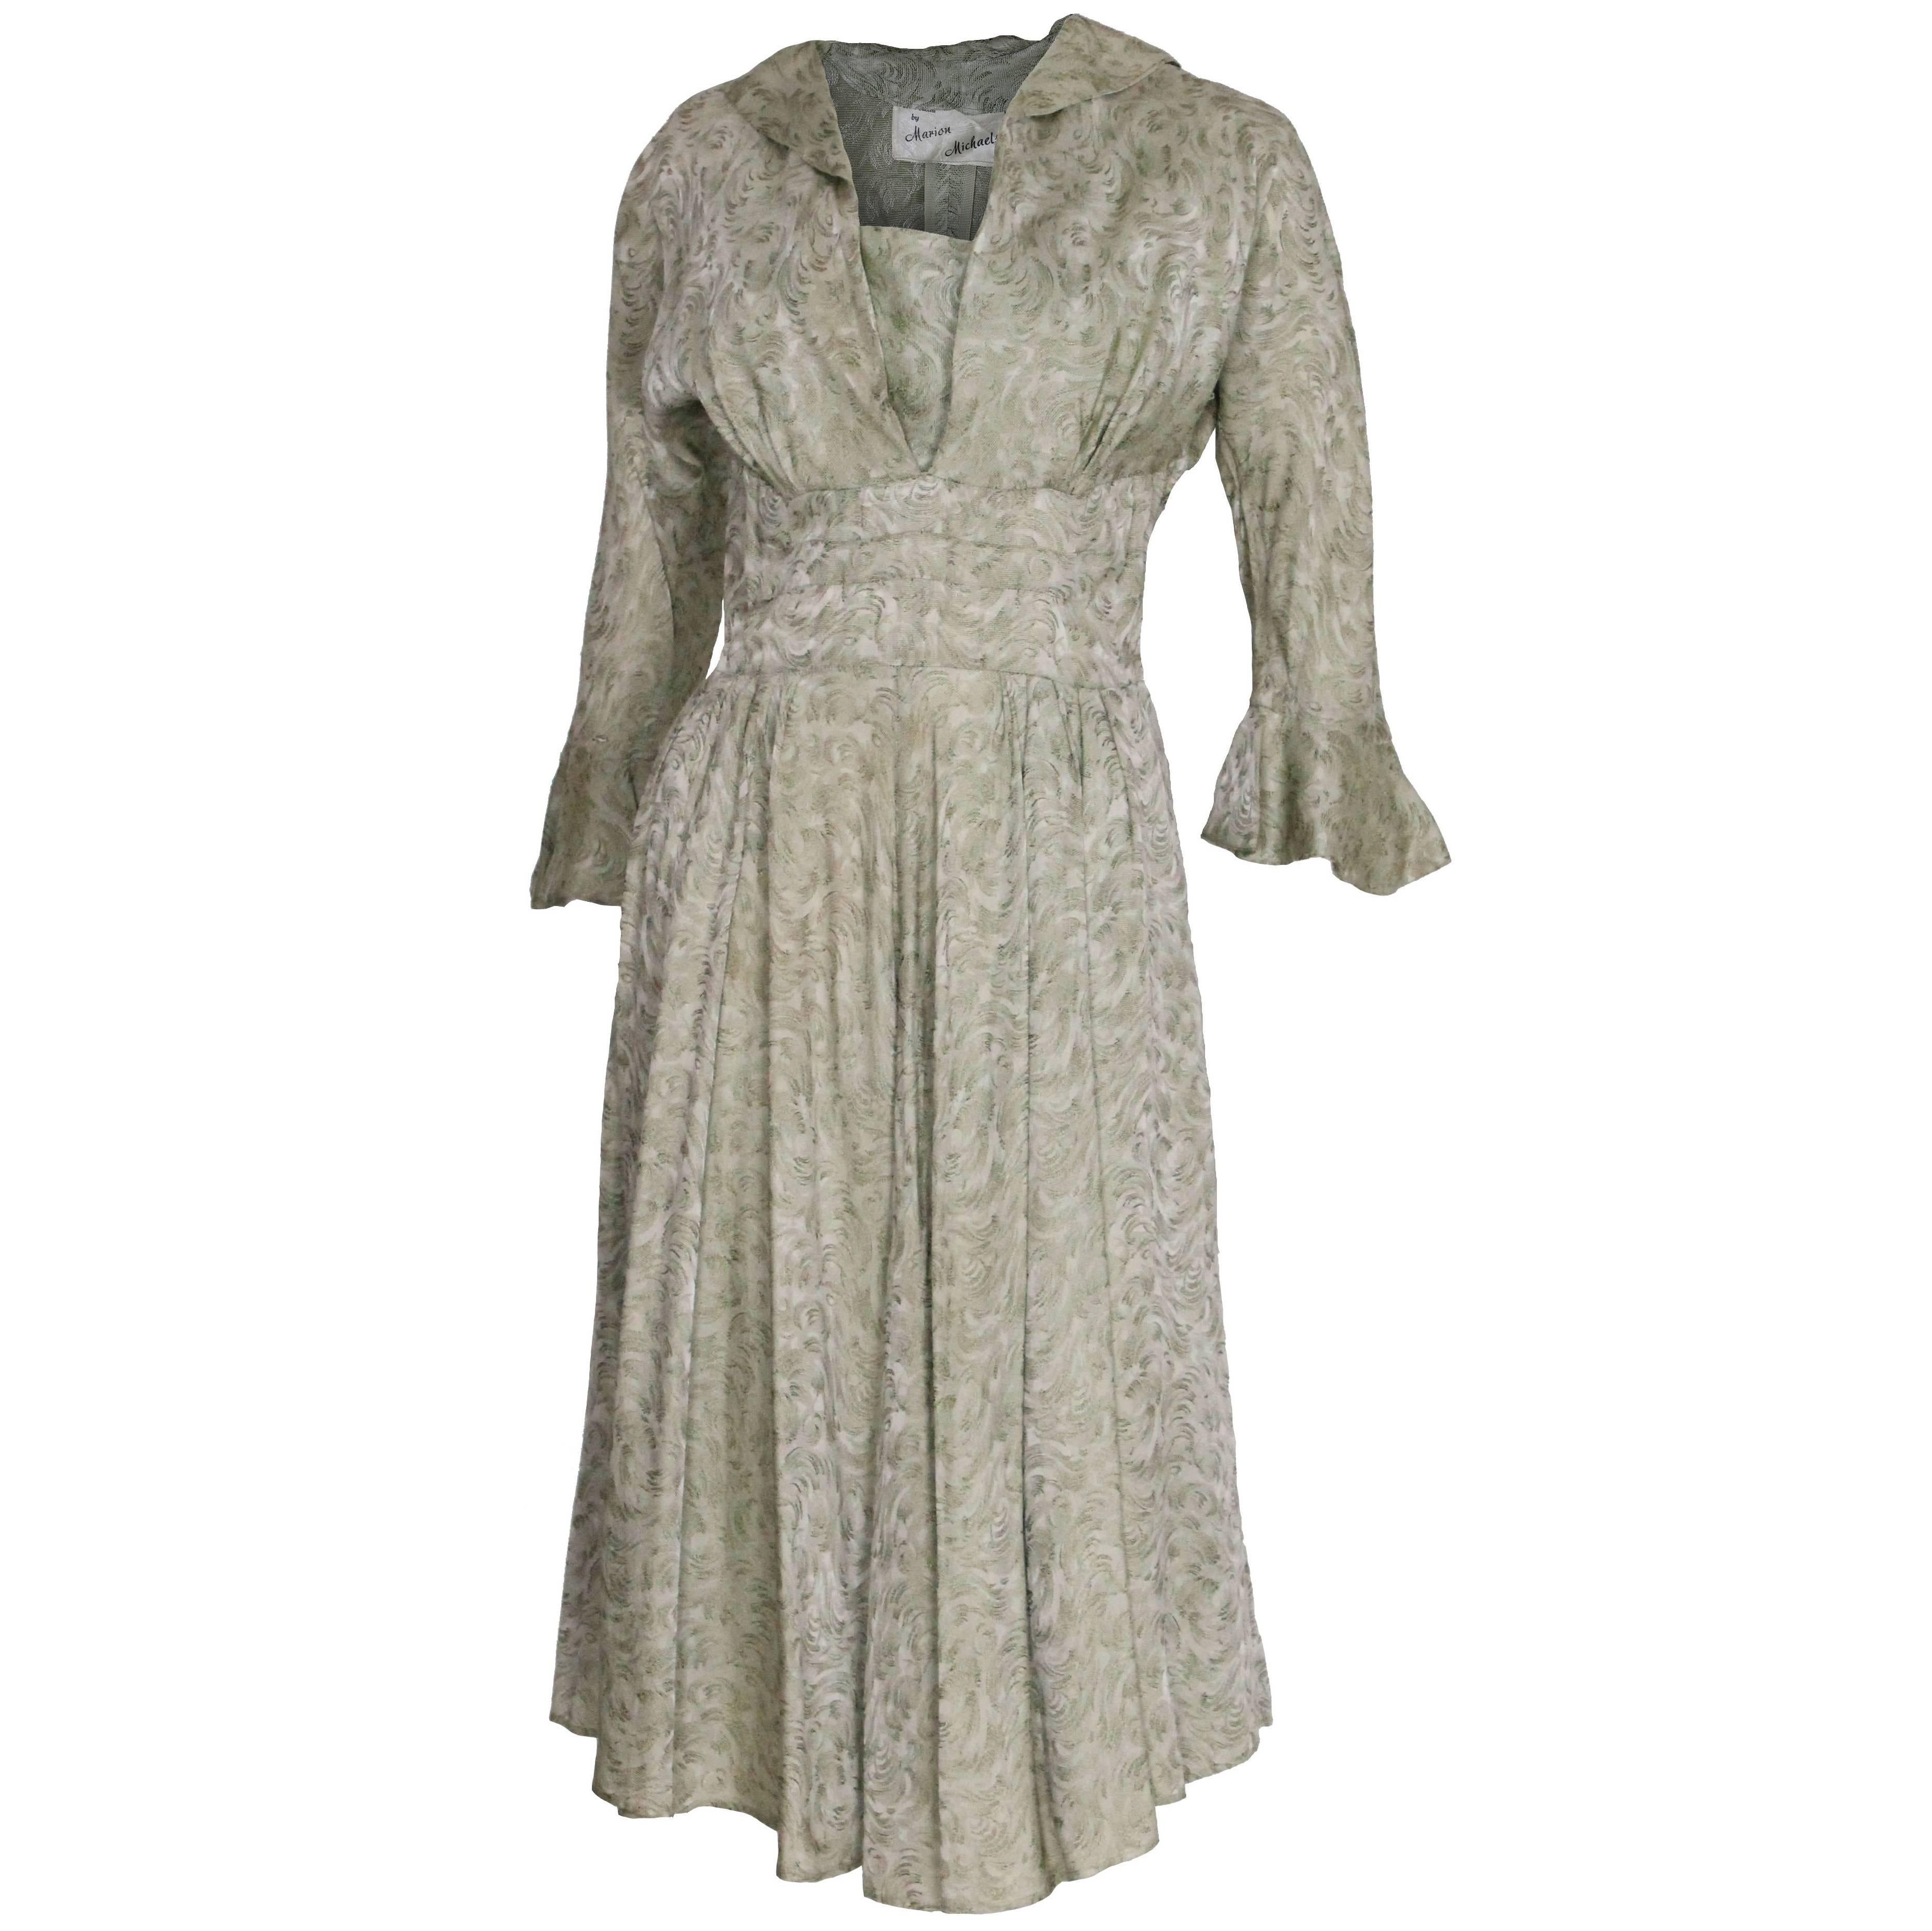 Marion Michael 1940s Sage Green Tea Dress For Sale